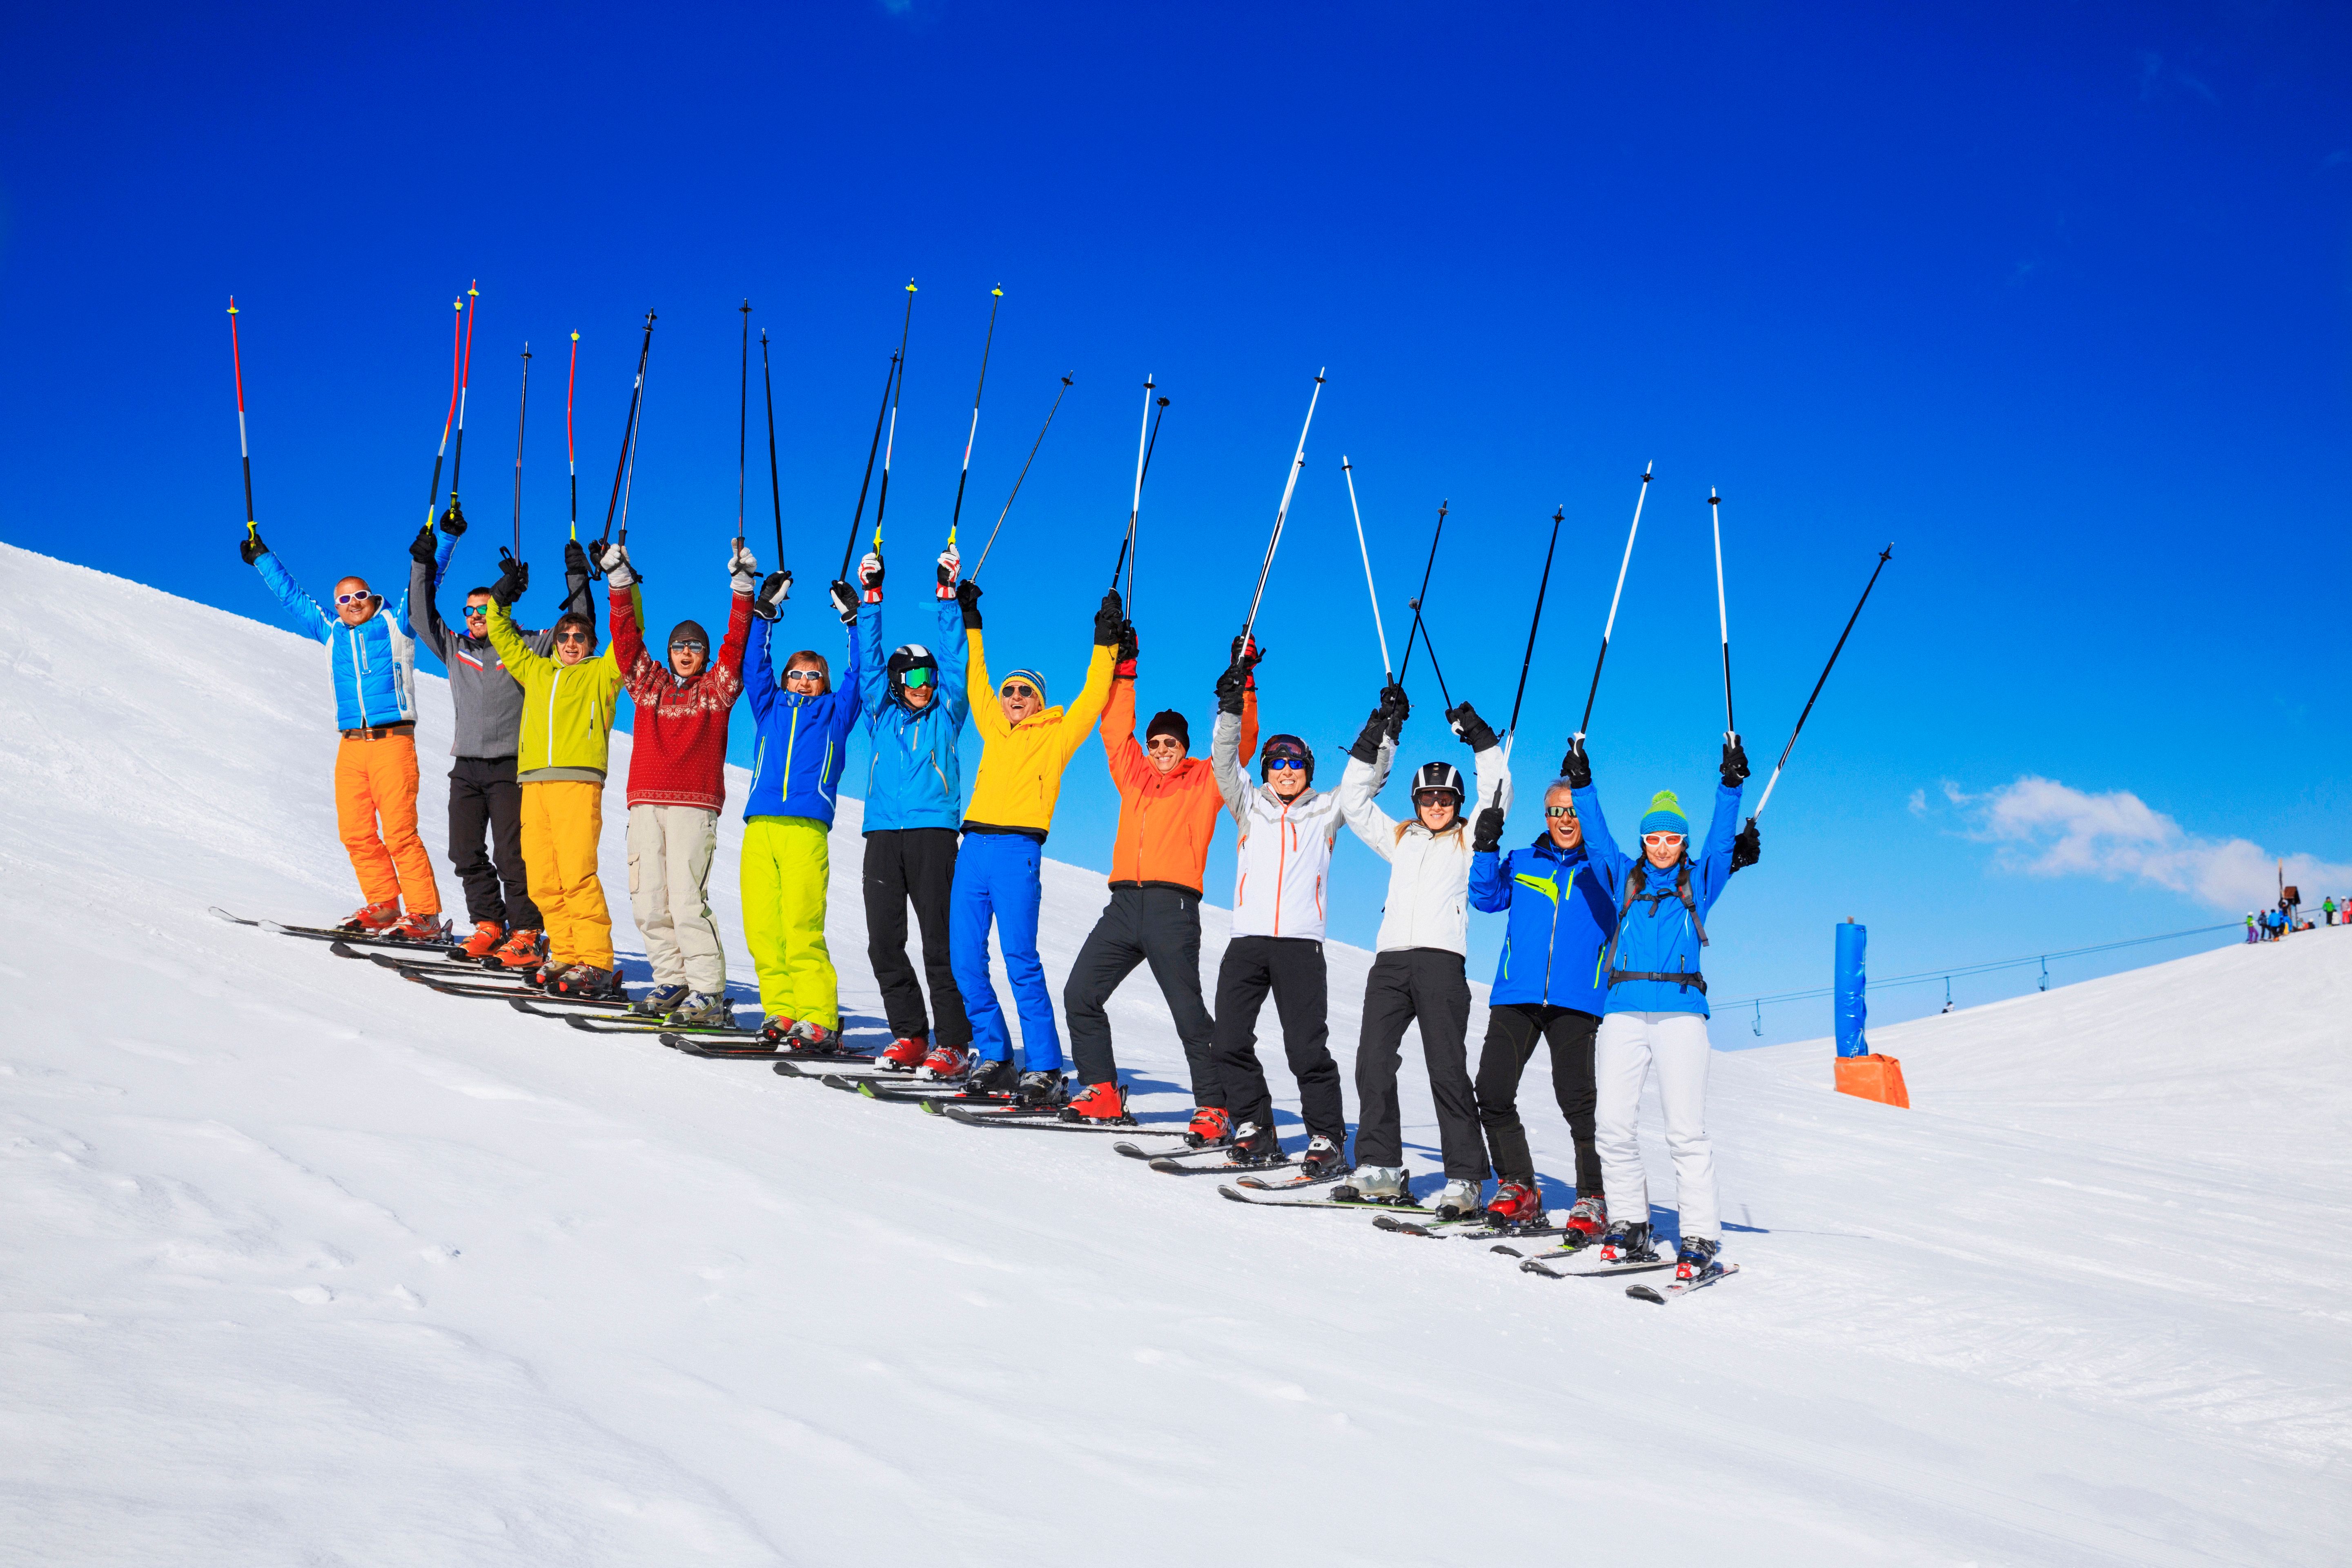 Wintersport groepsreizen zonder zorgen